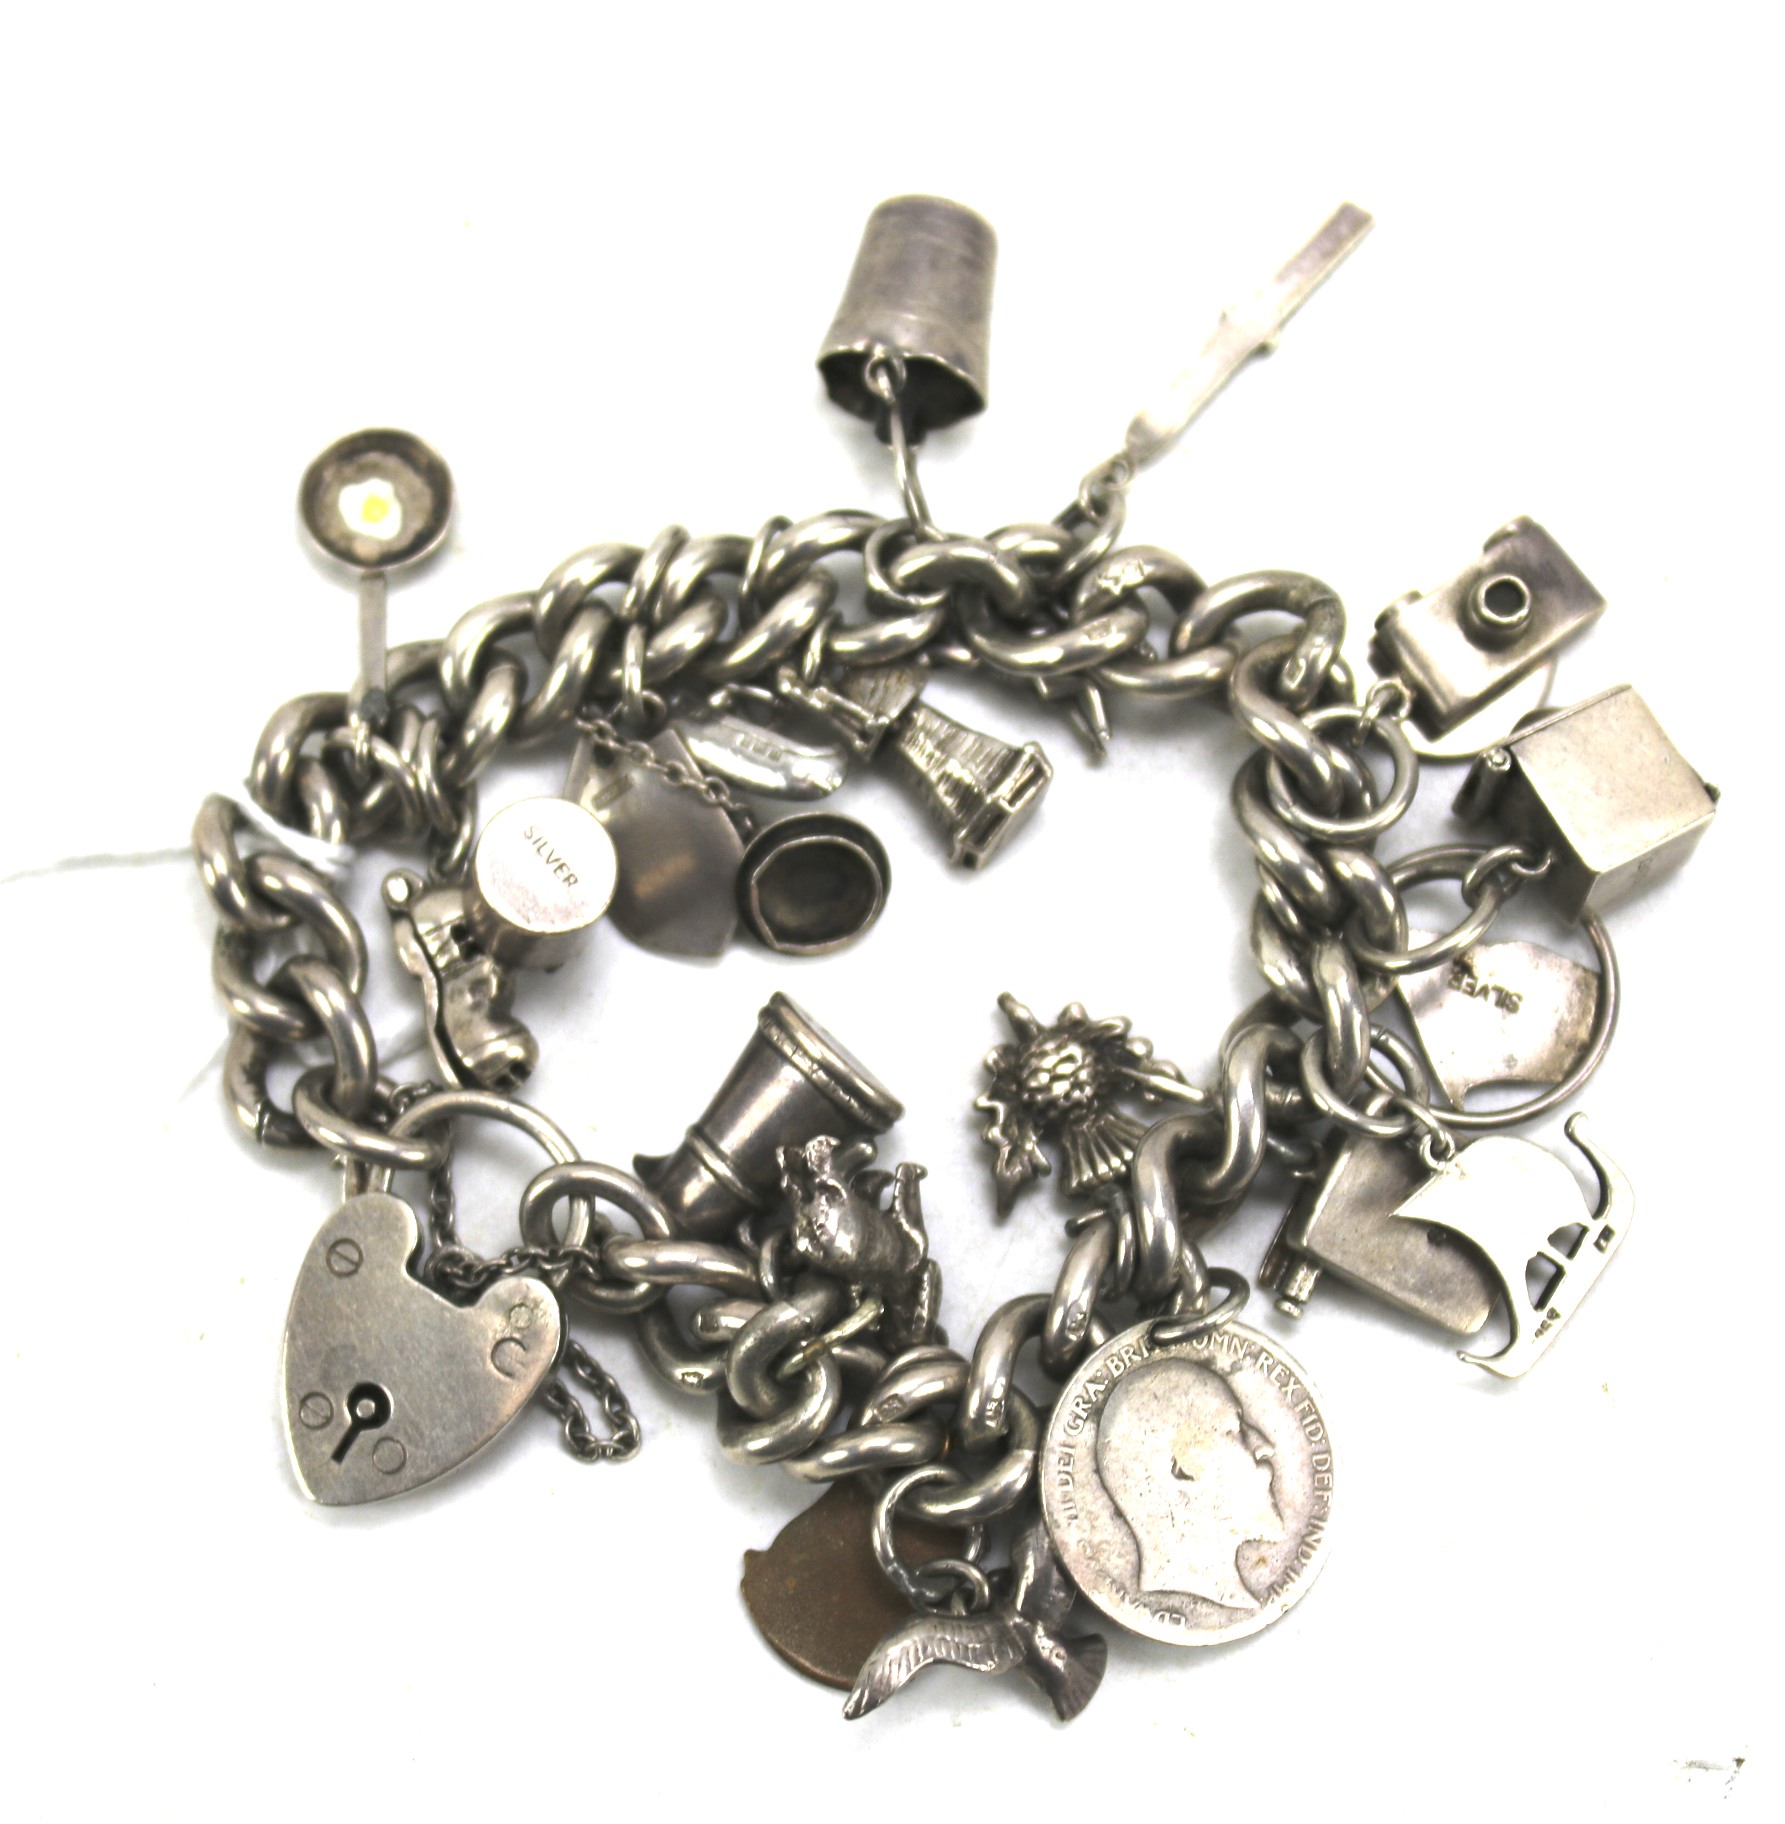 A silver charm bracelet with a heart padlock.